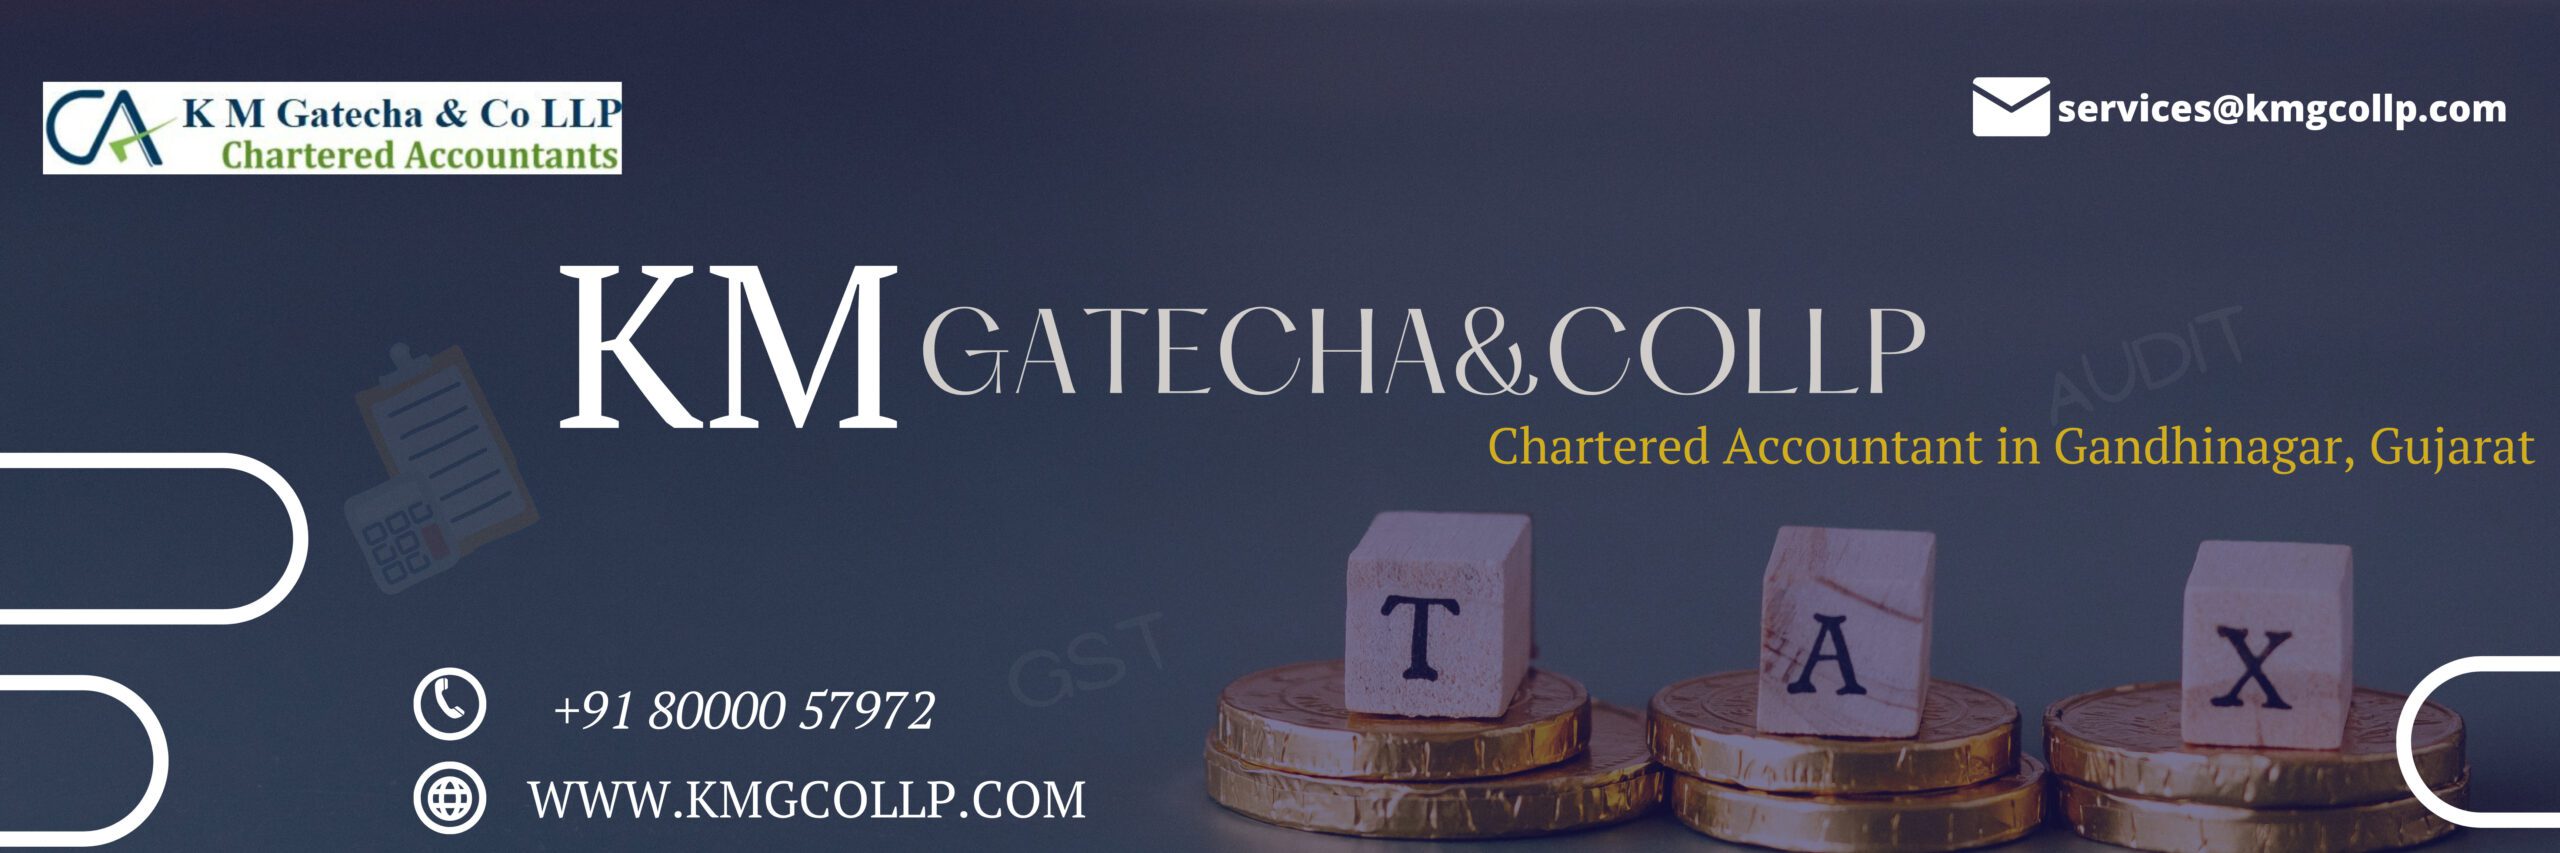 CA Chartered Accountant in Gandhinagar, Gujarat